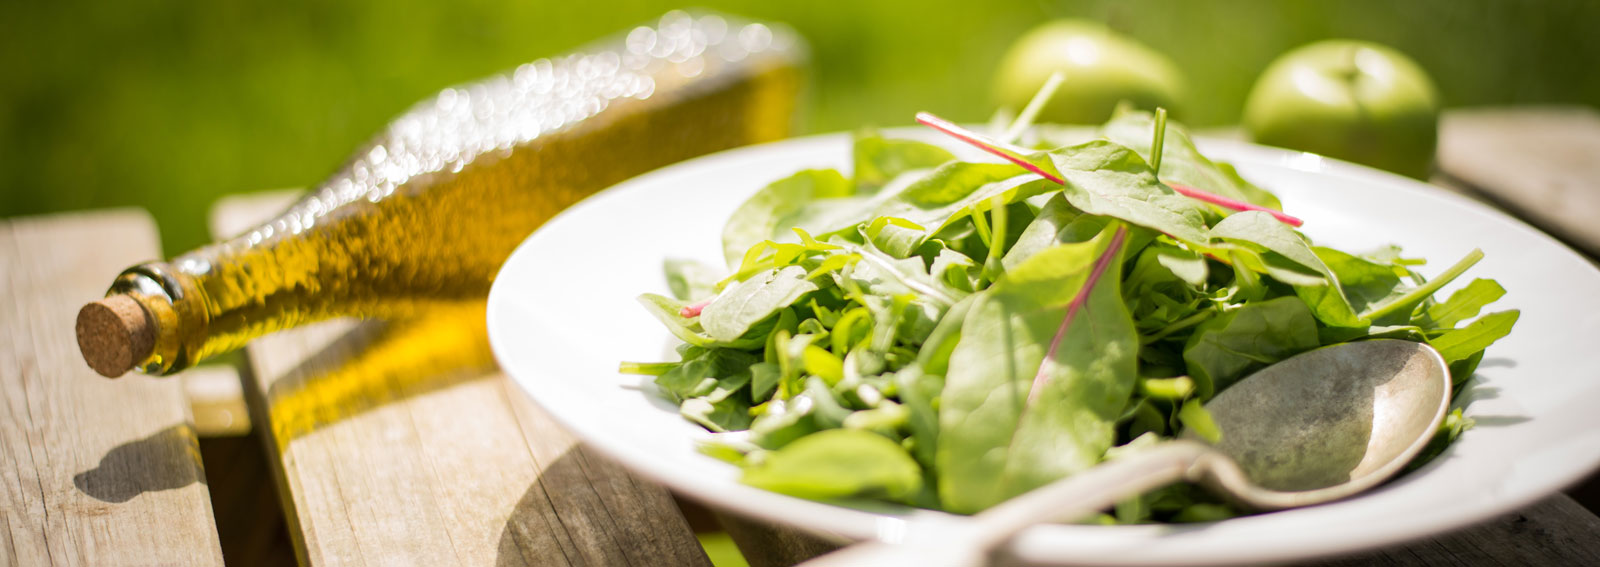 magnesium-salad-diet-weightloss-health